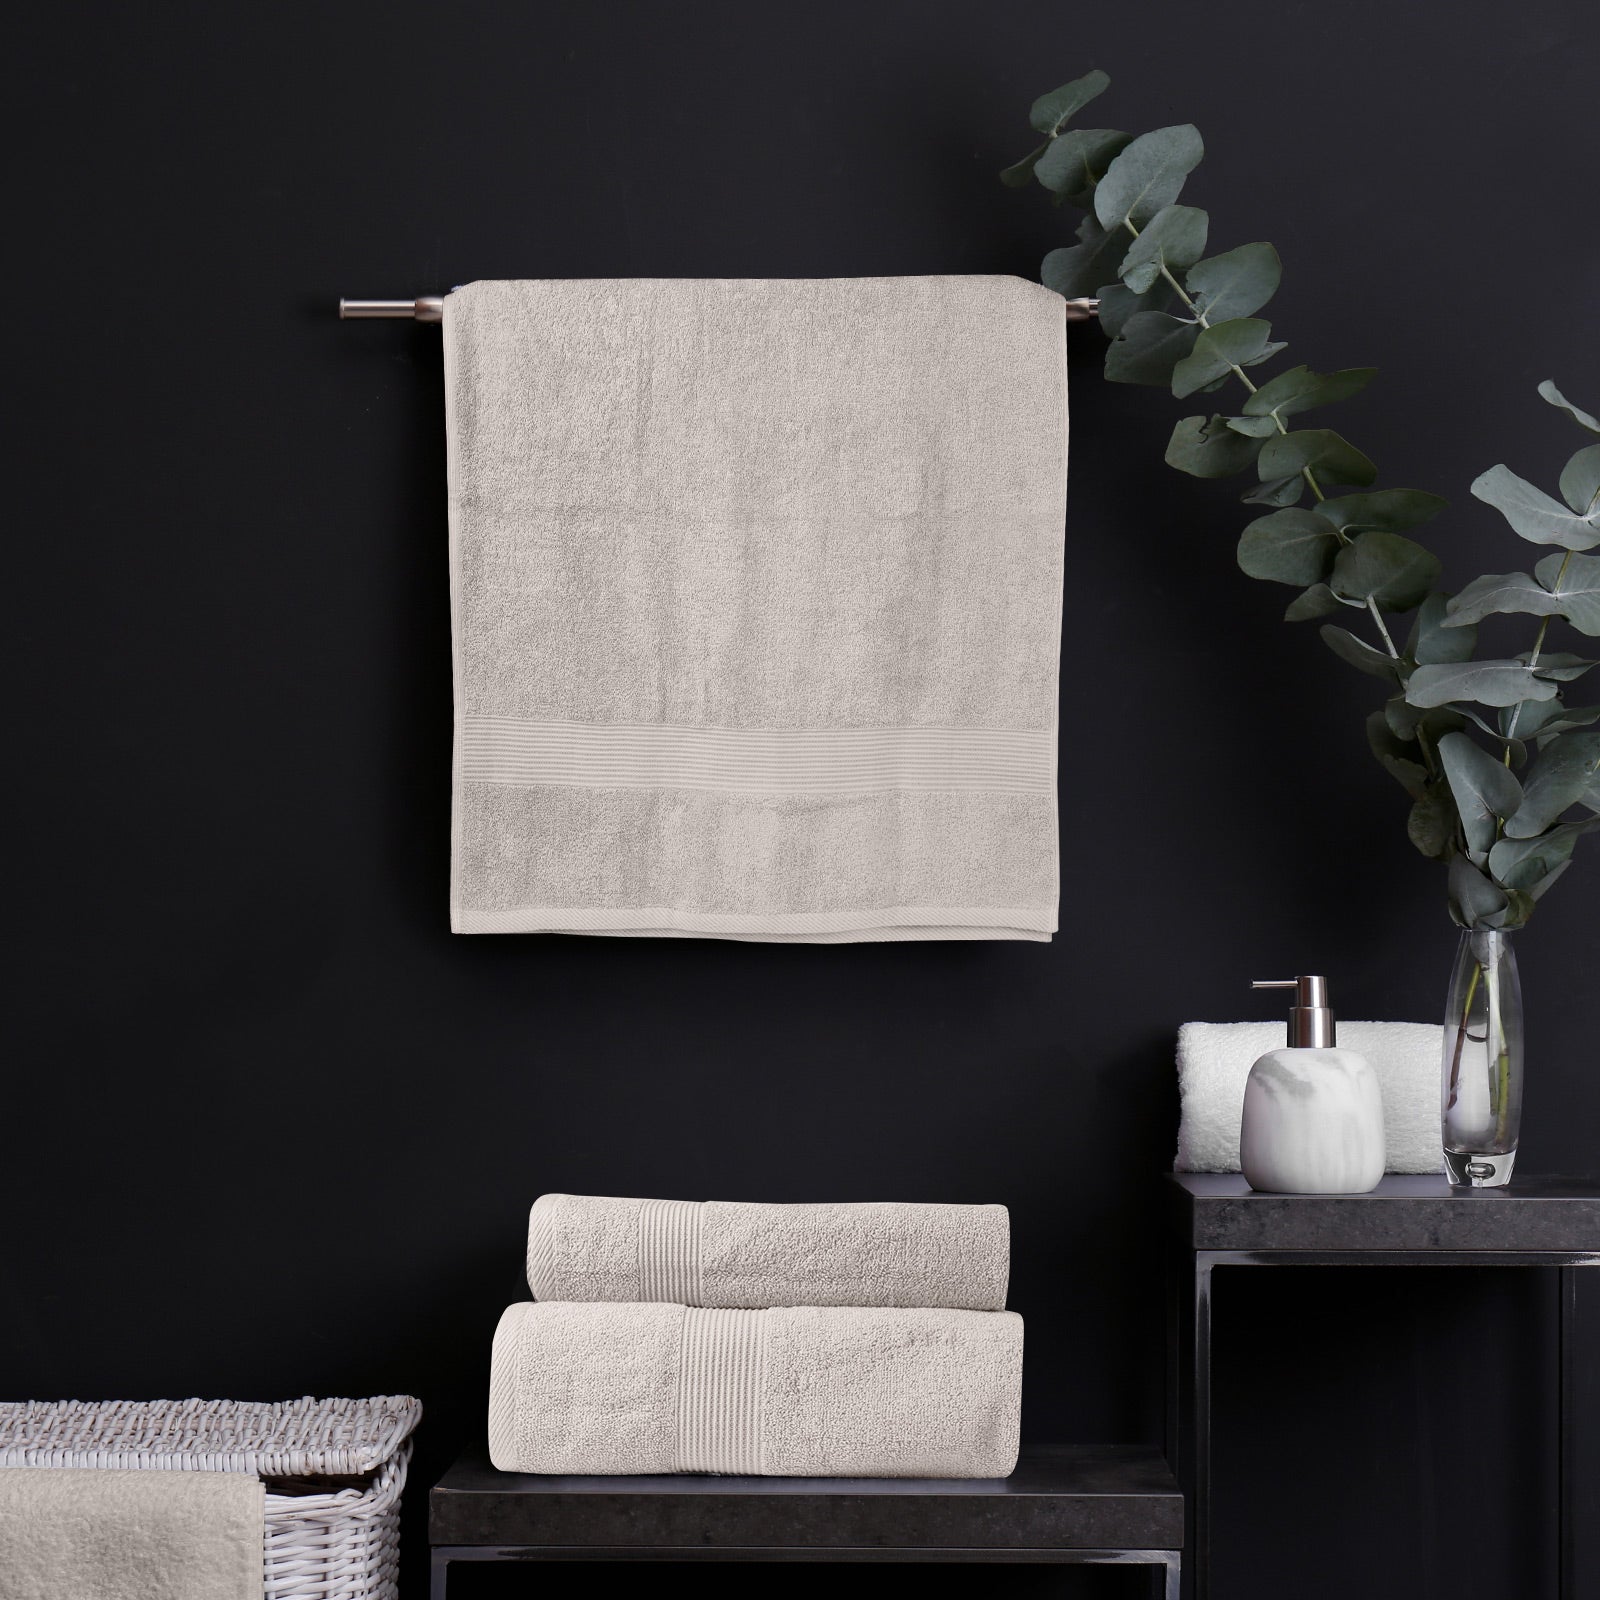 Royal Comfort 5 Piece Cotton Bamboo Towel Set 450GSM Luxurious Absorbent Plush - Sea Holly - SILBERSHELL